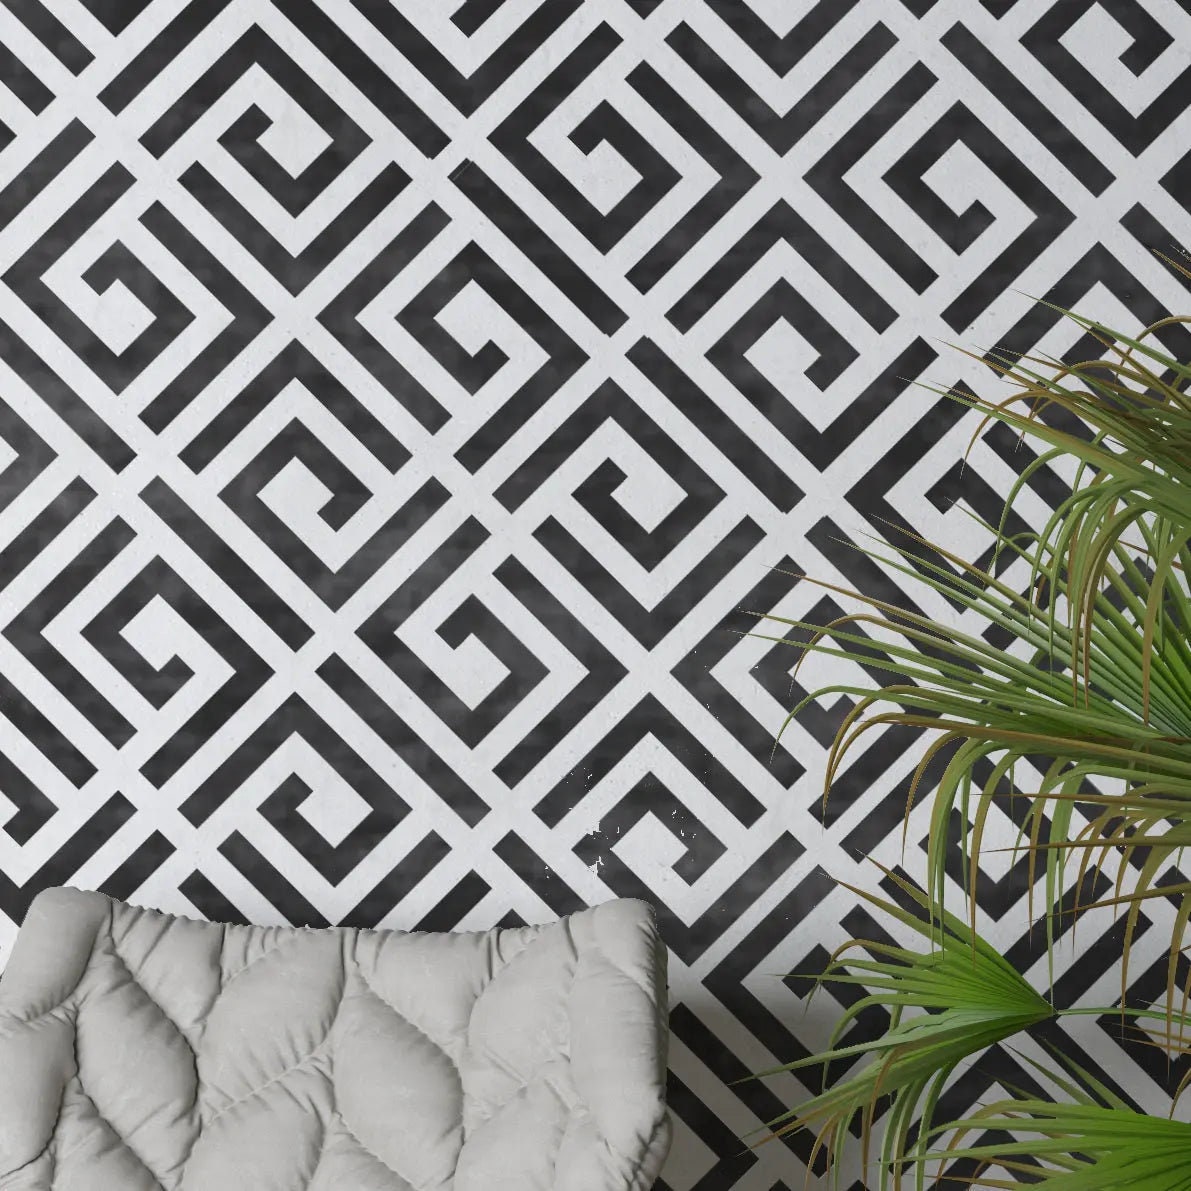 Geo allover pattern stencil - Geometric stencils for walls - DIY home decor